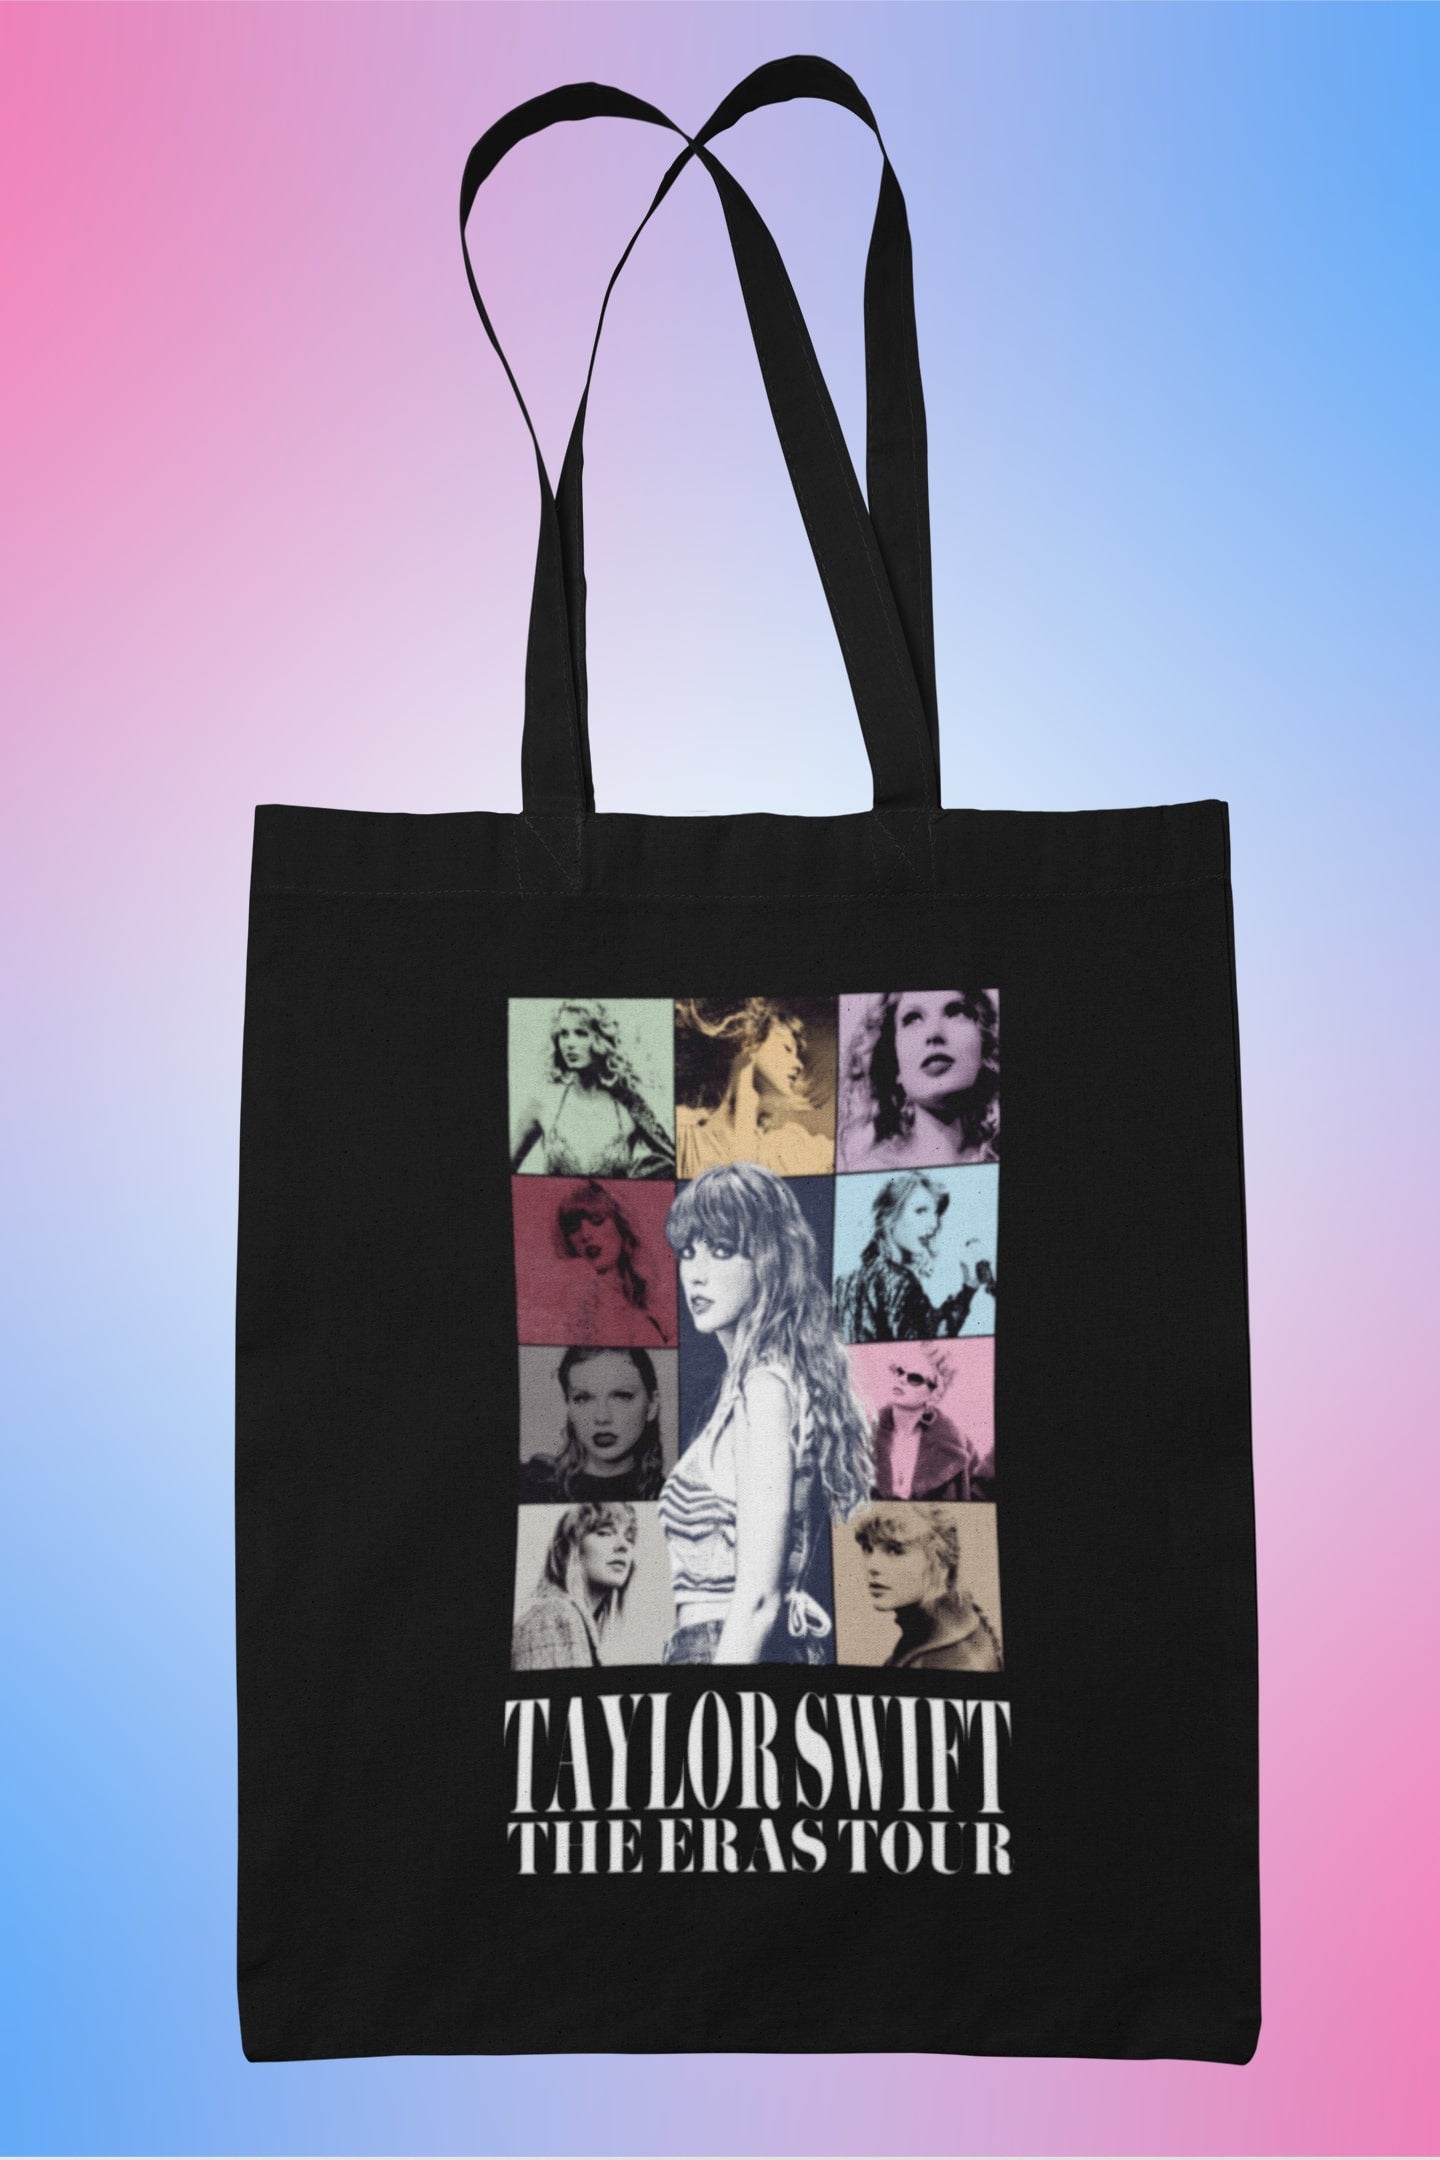 Taylor Swift Eras Tour Zipper Tote Bag